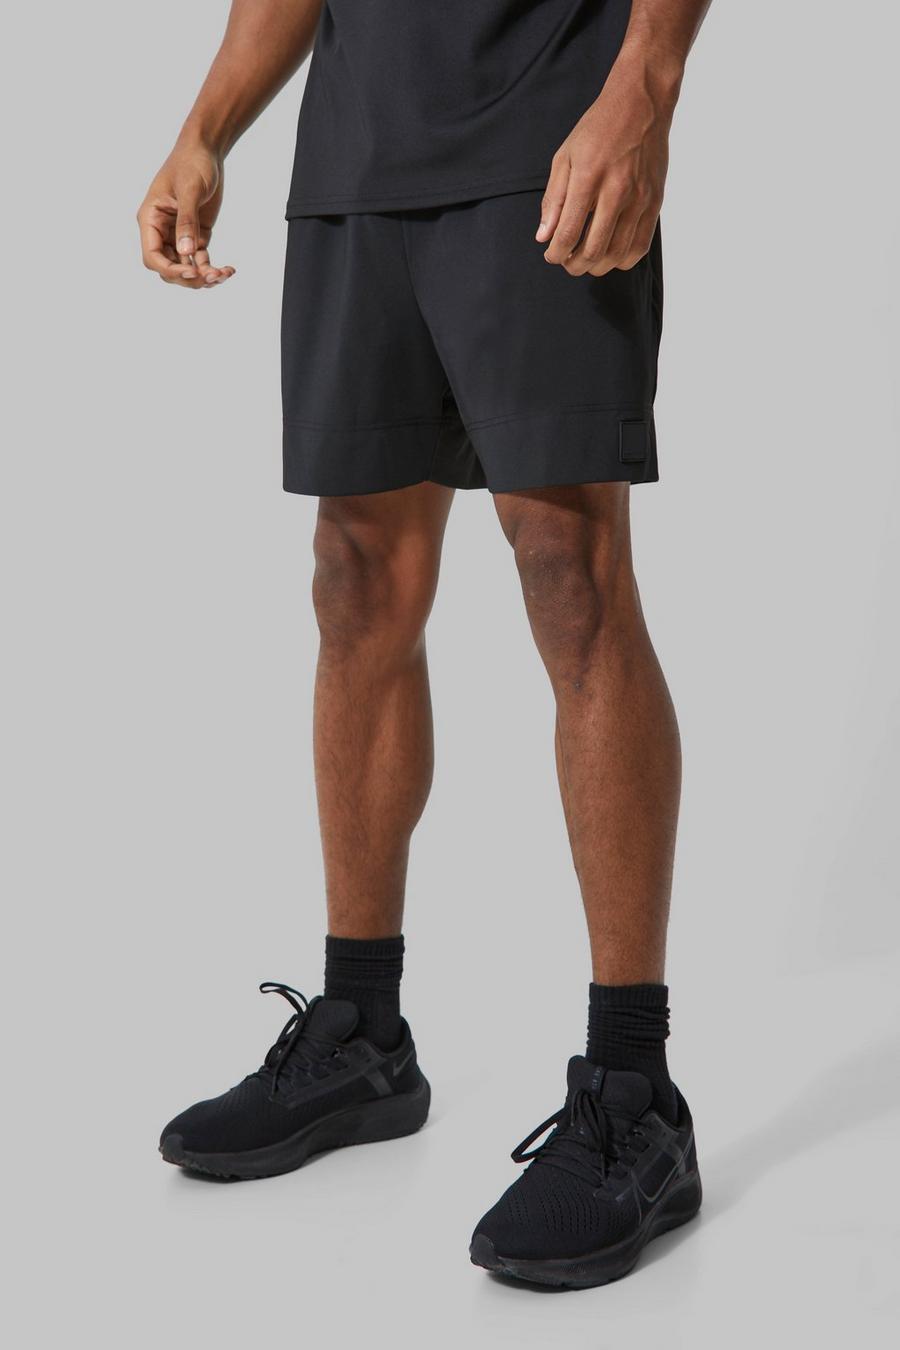 Pantaloncini attillati Man Active da 12 cm, Black